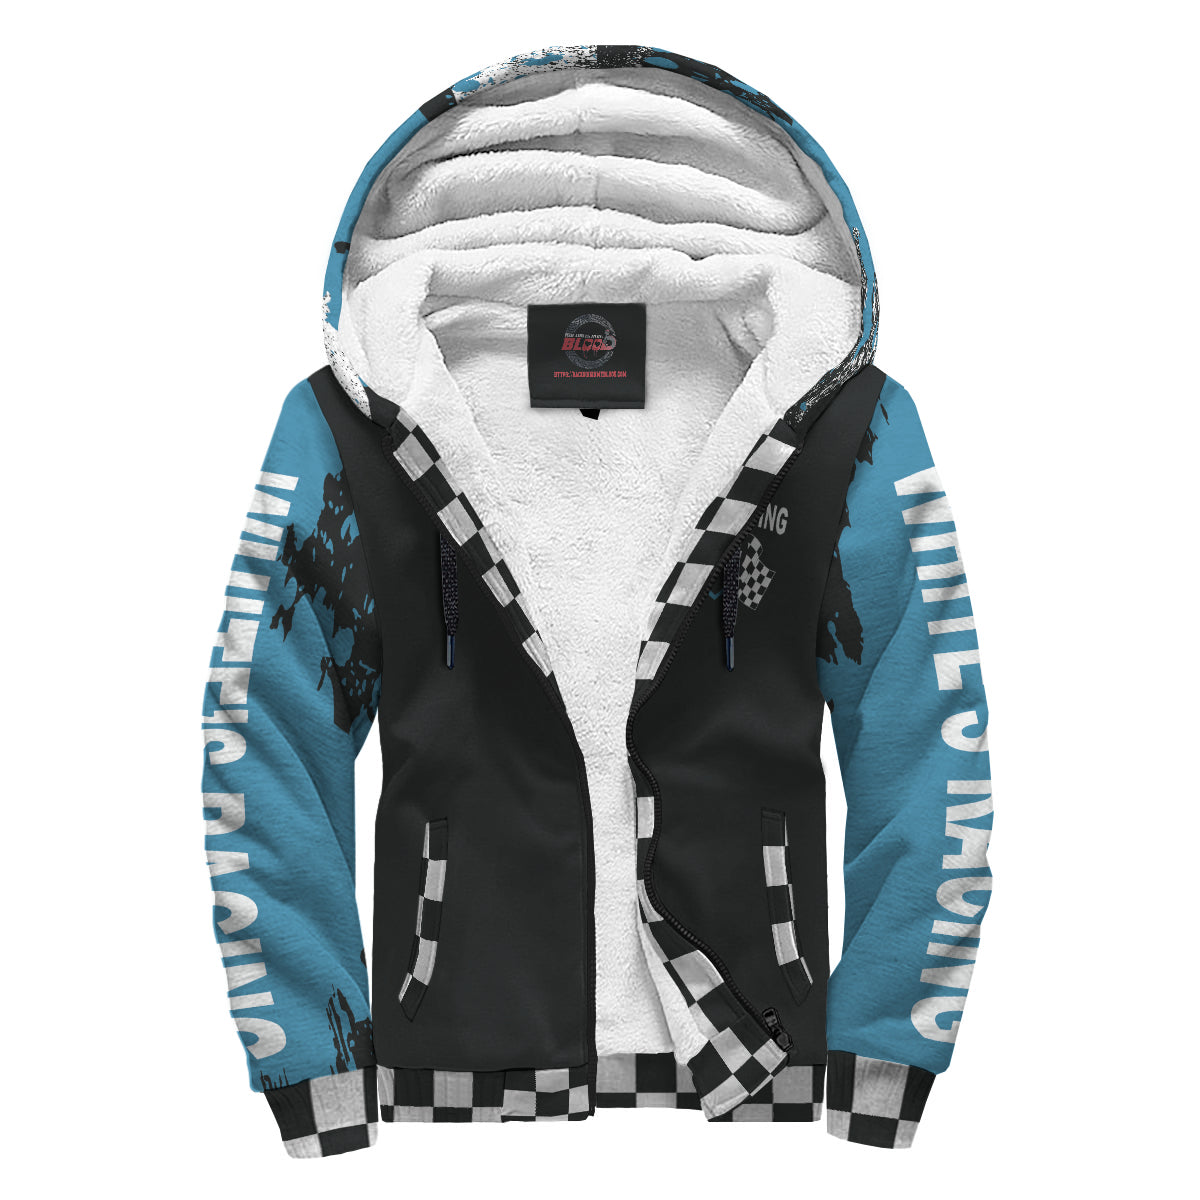 White’s Racing #3W sherpa jacket